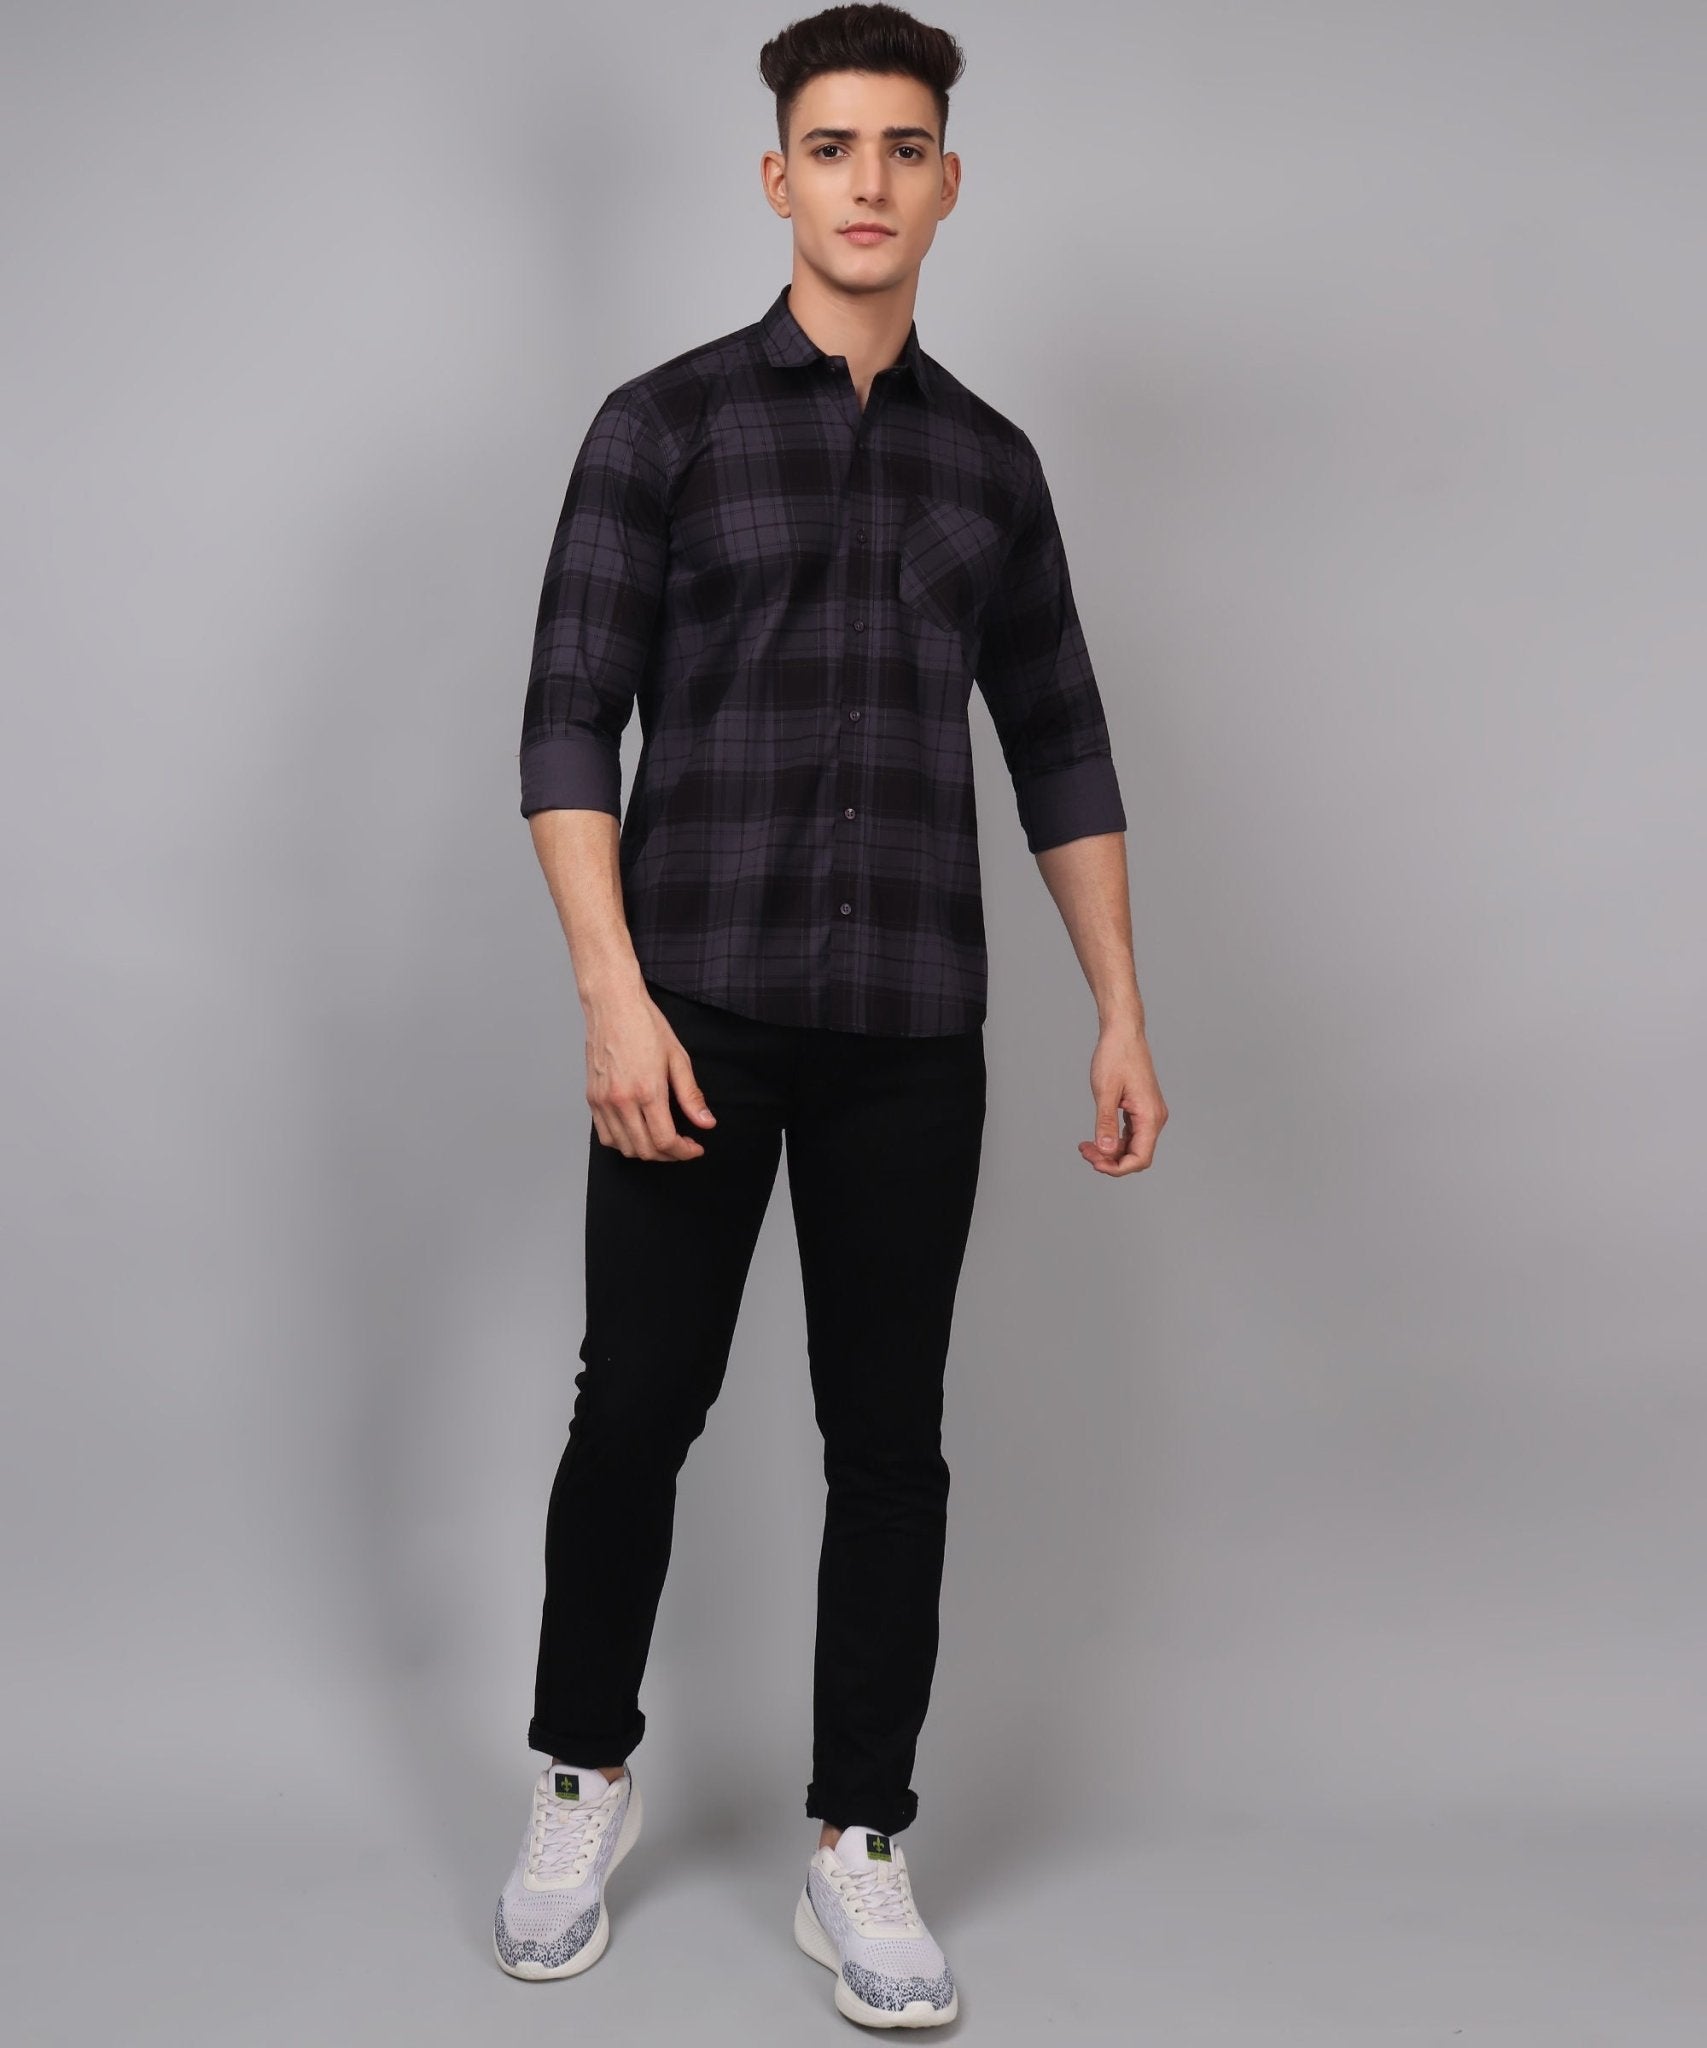 TryBuy Premium Grey Black Checks Cotton Casual Shirt for Men - TryBuy® USA🇺🇸